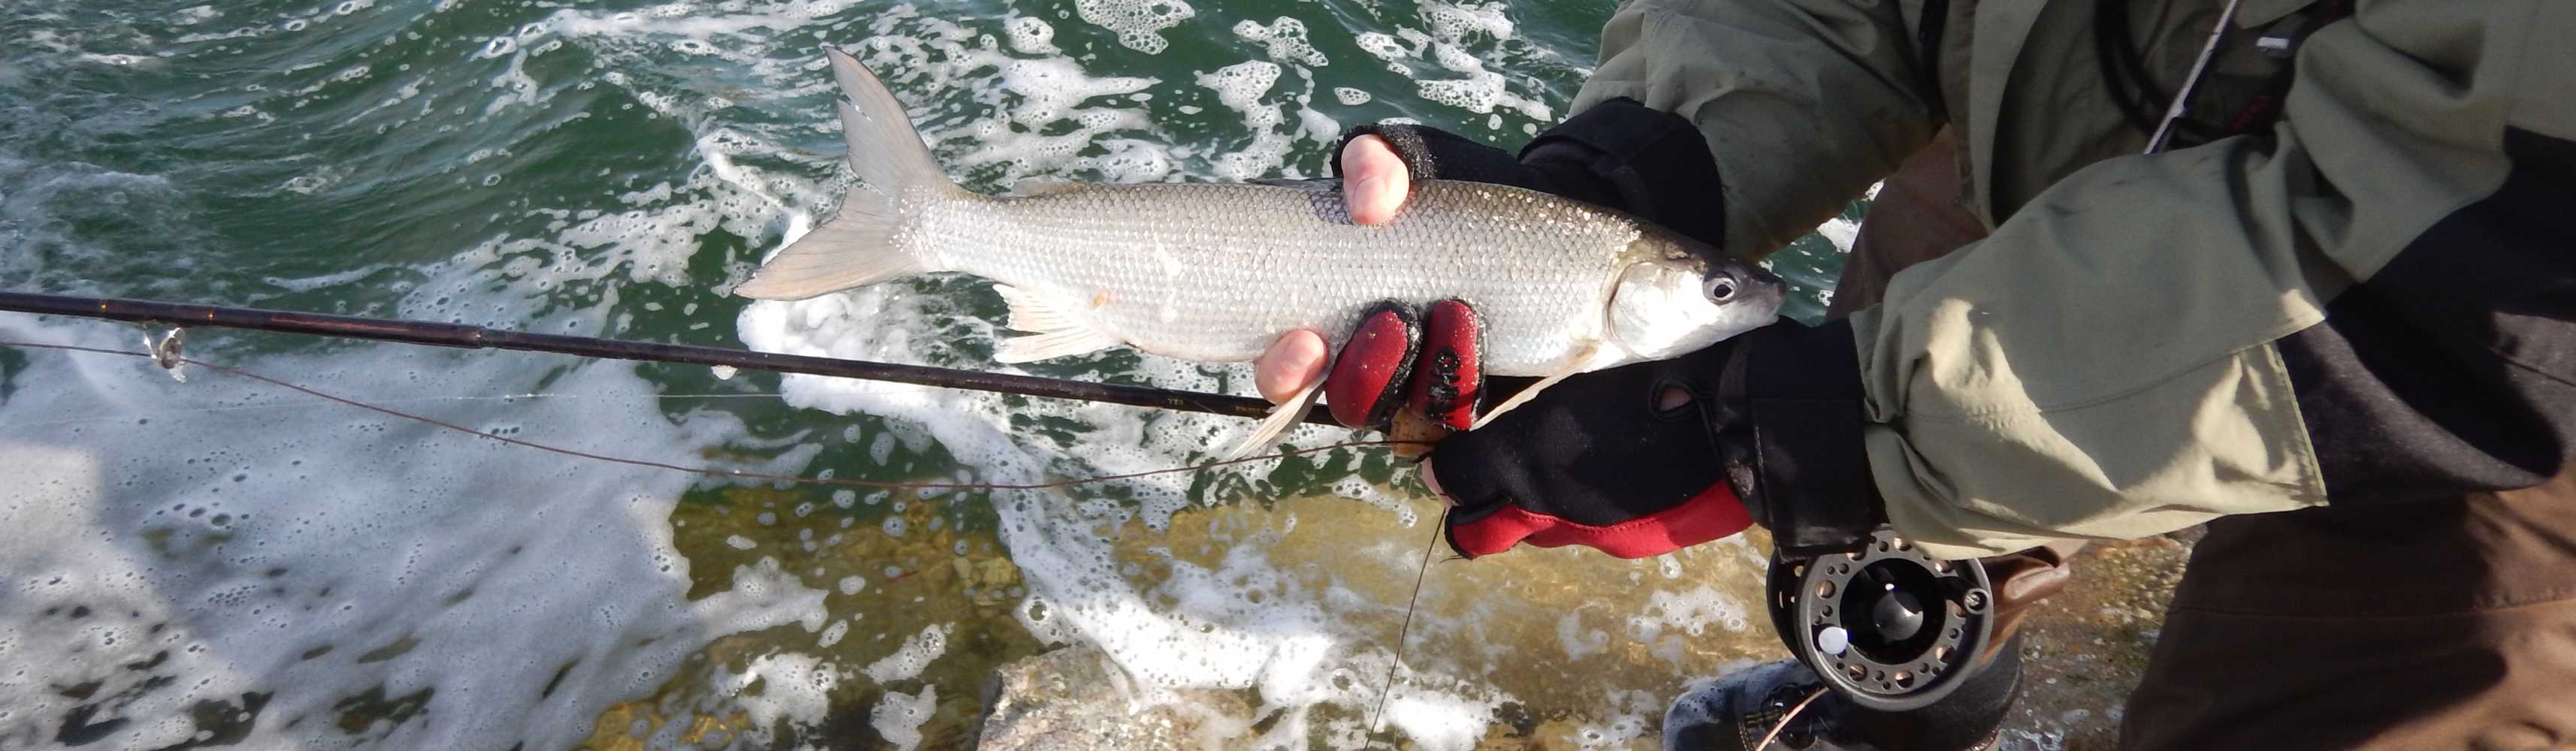 https://flyfishingmanitoba.com/wp-content/uploads/2019/04/Fariford-River-Whitefish-and-fly-rod.jpg